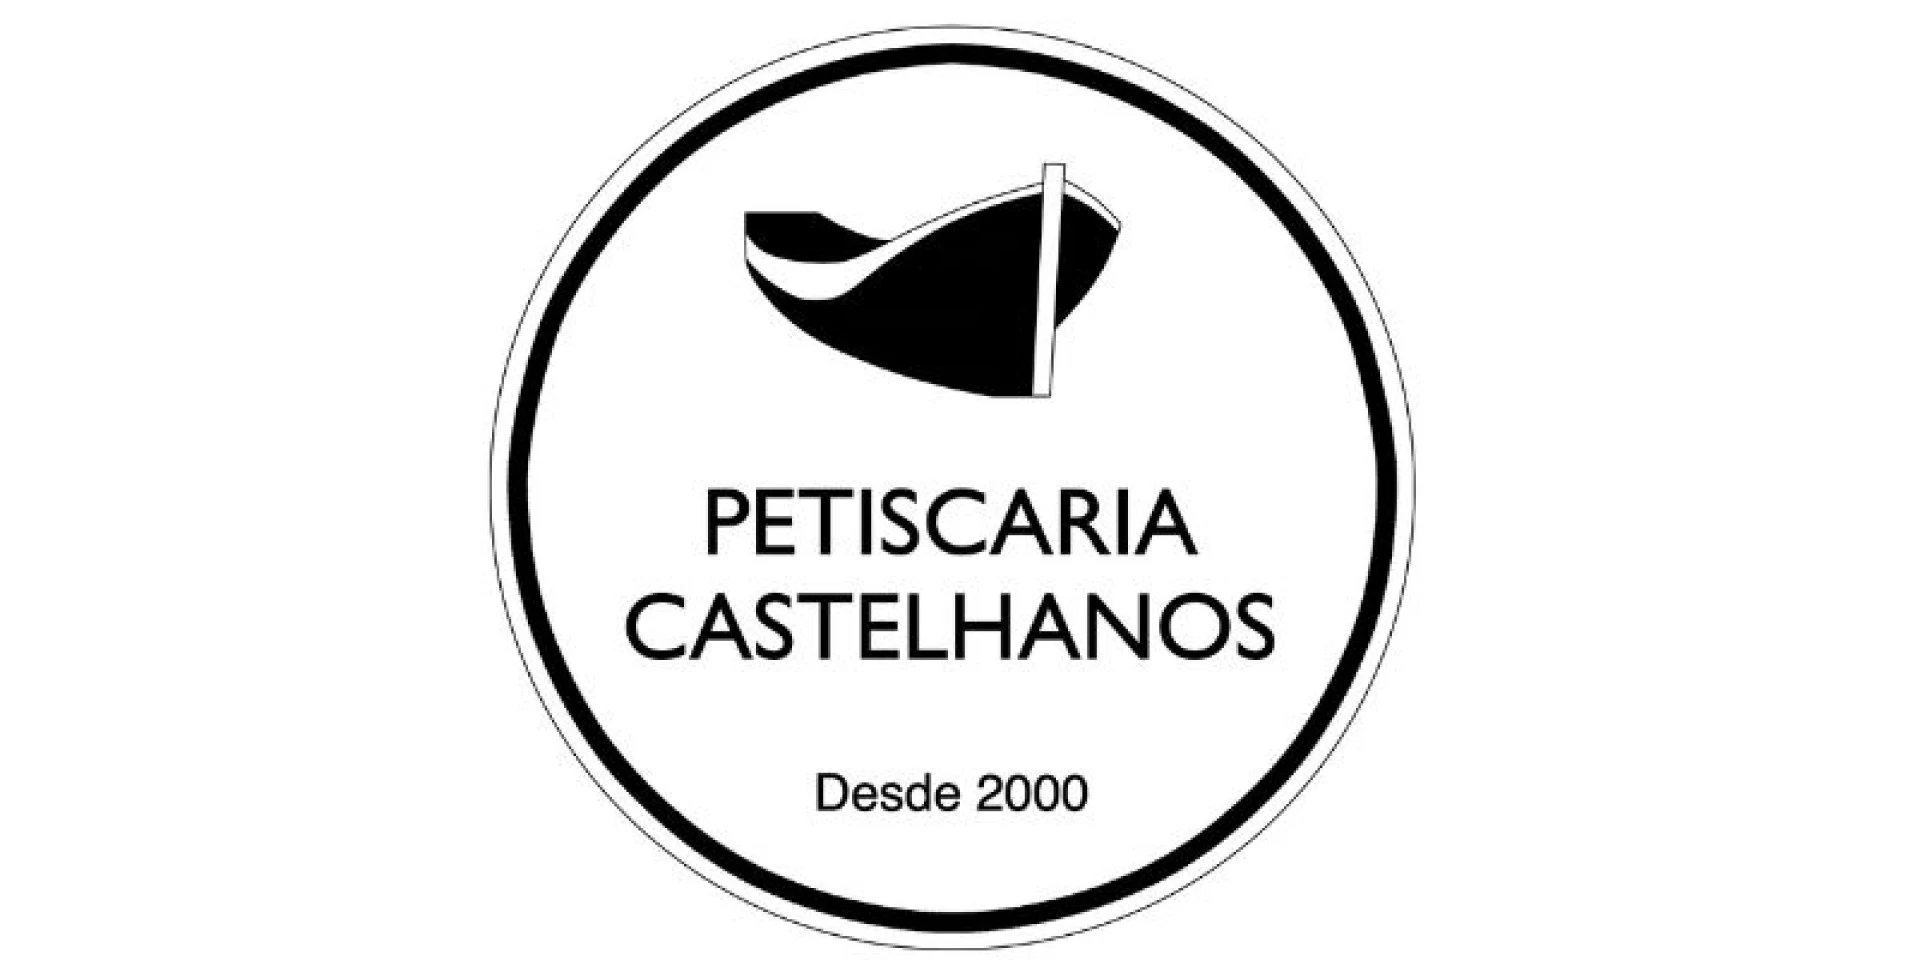 Petiscaria Castelhanos